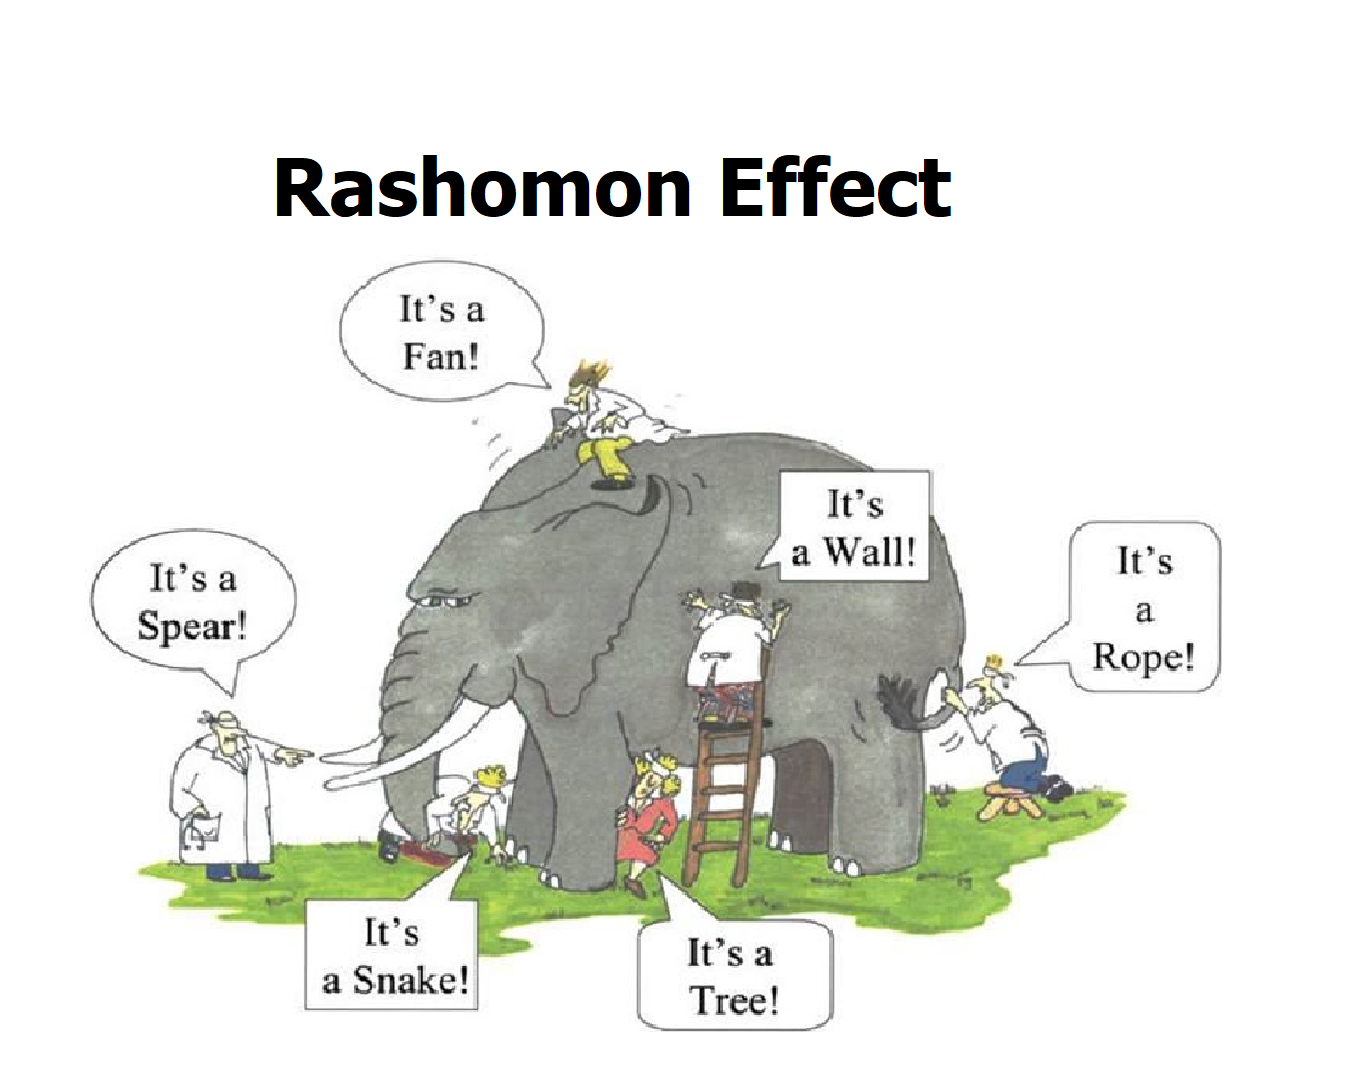 The Rashomon Effect 